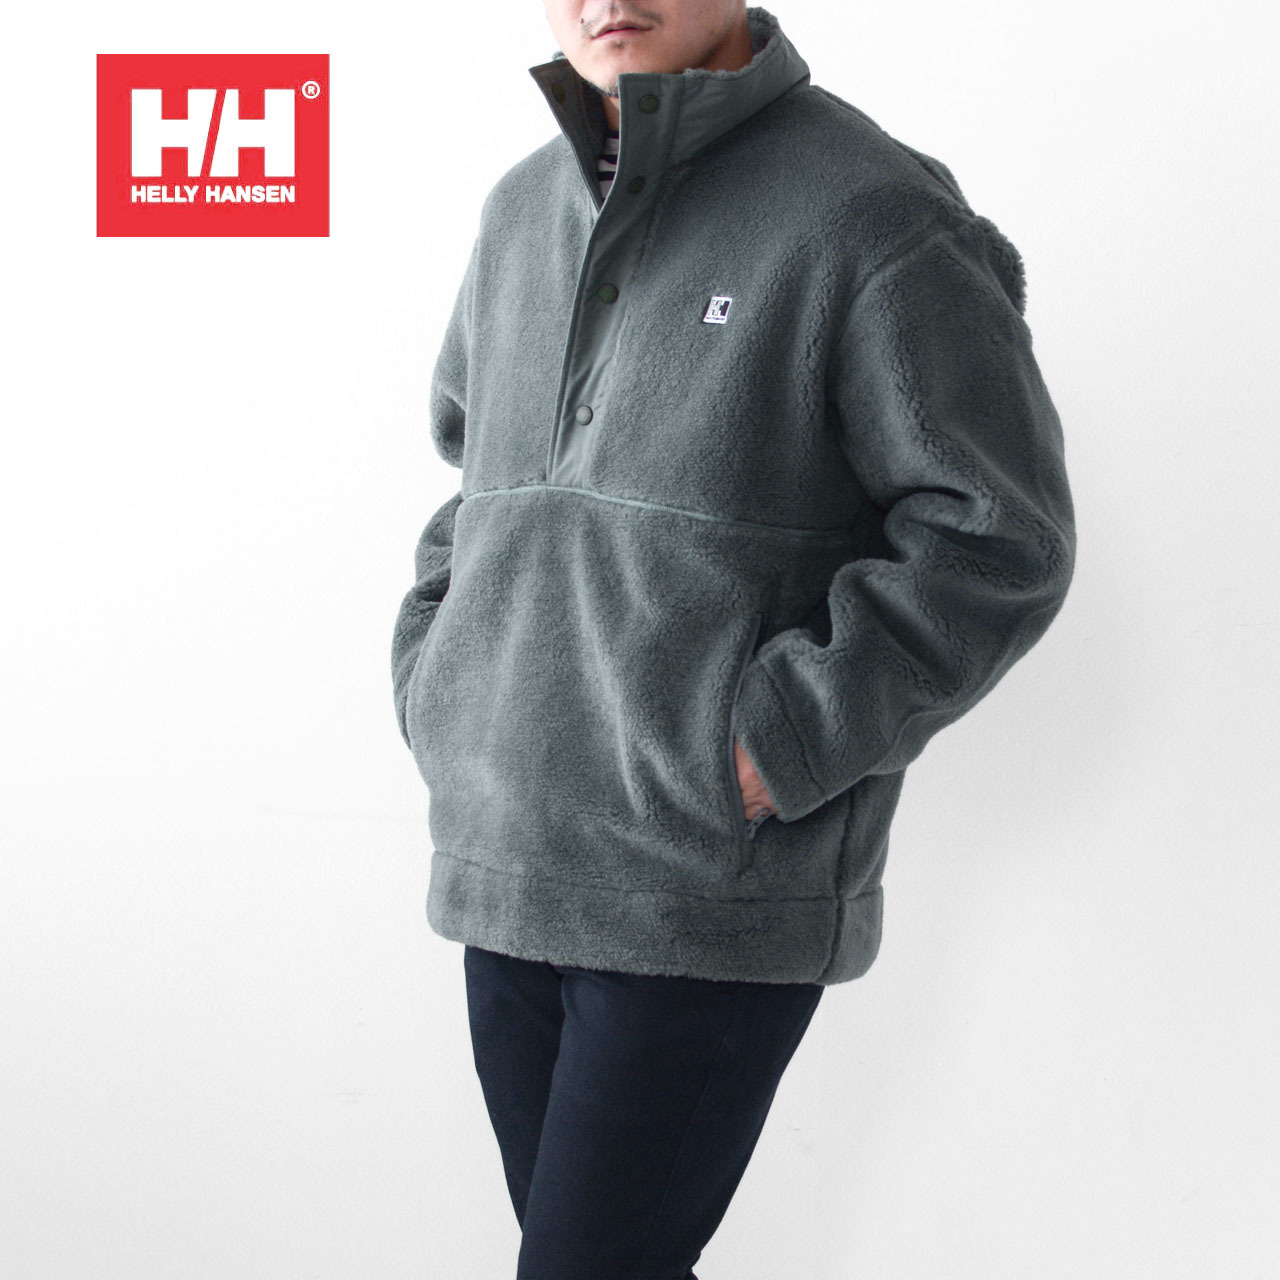 HELLY HANSEN [ヘリーハンセン] M's FIBERPILE Hybrid Jacket [HE52173